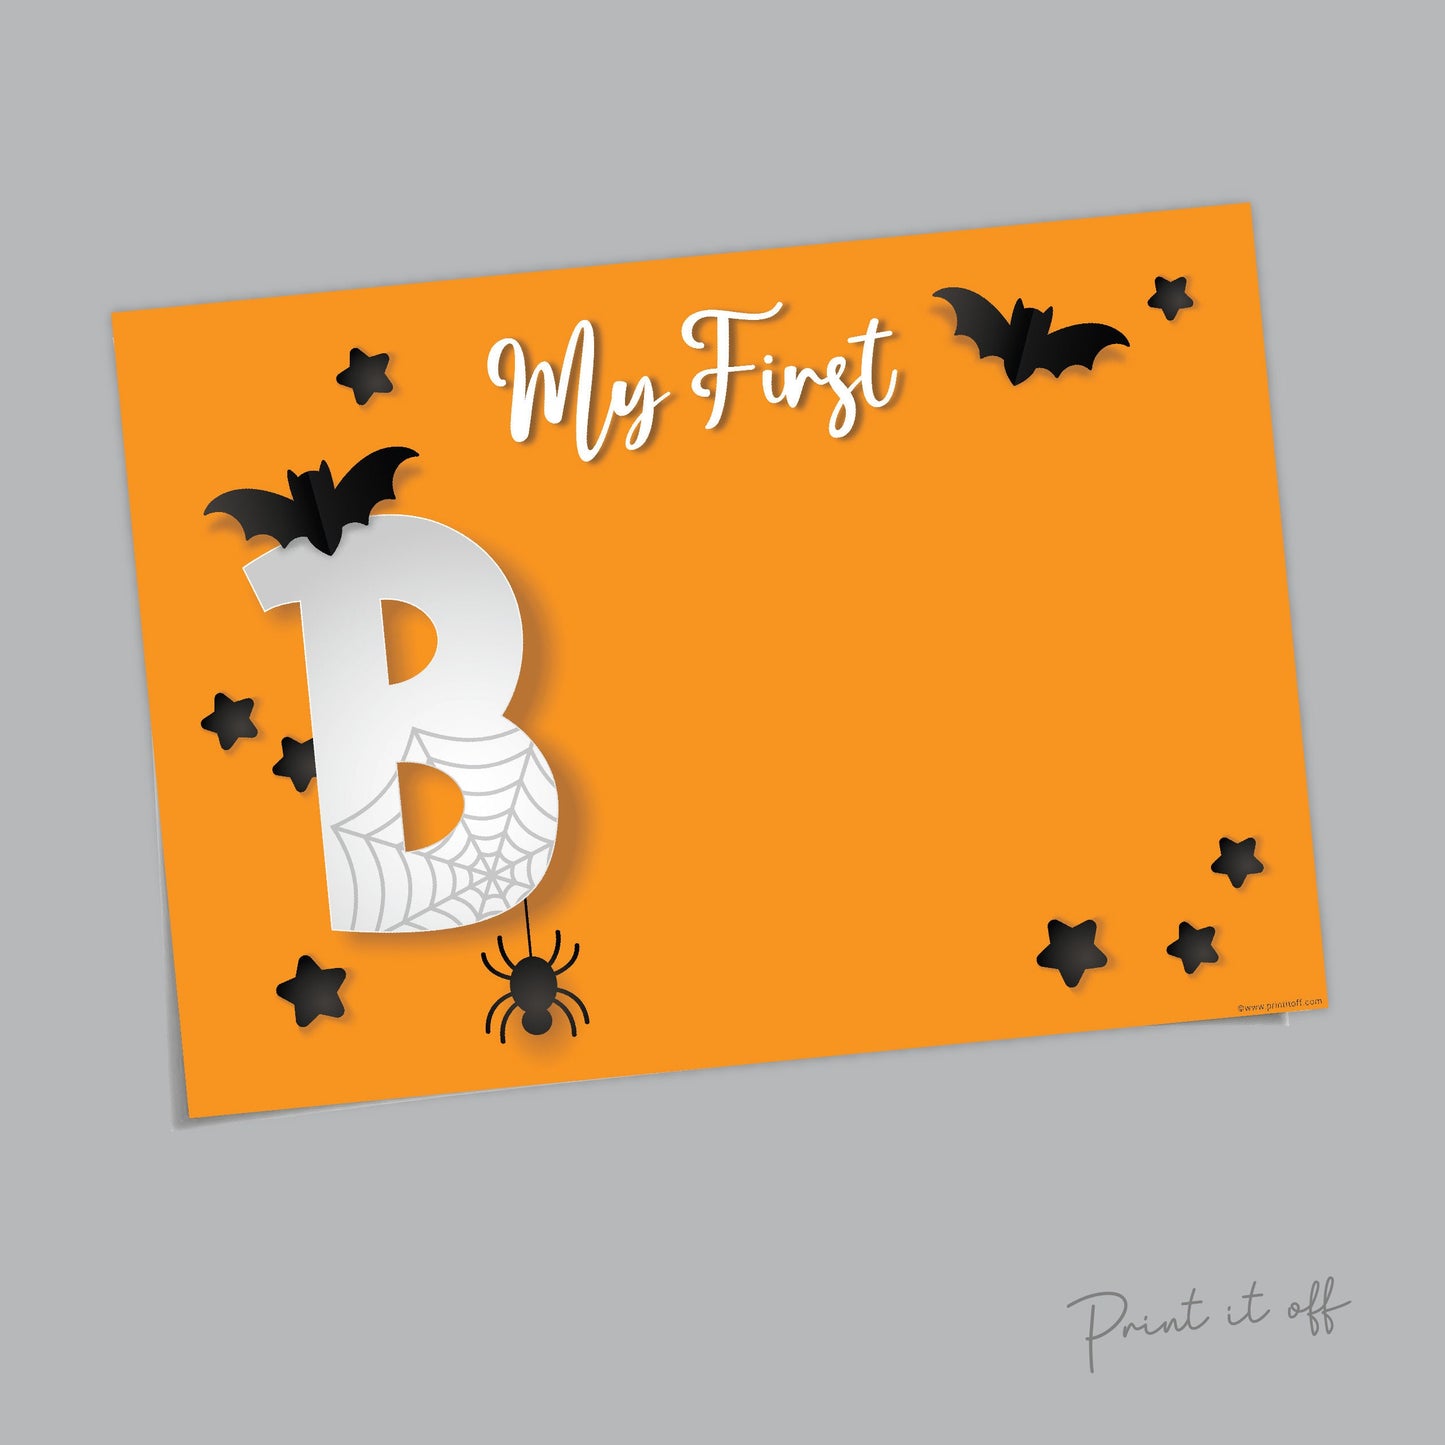 My First Boo / 1st Halloween Ghost Footprint Handprint Art Craft Child Baby Card Memory Activity Keepsake Decor DIY / Print It Off 0585